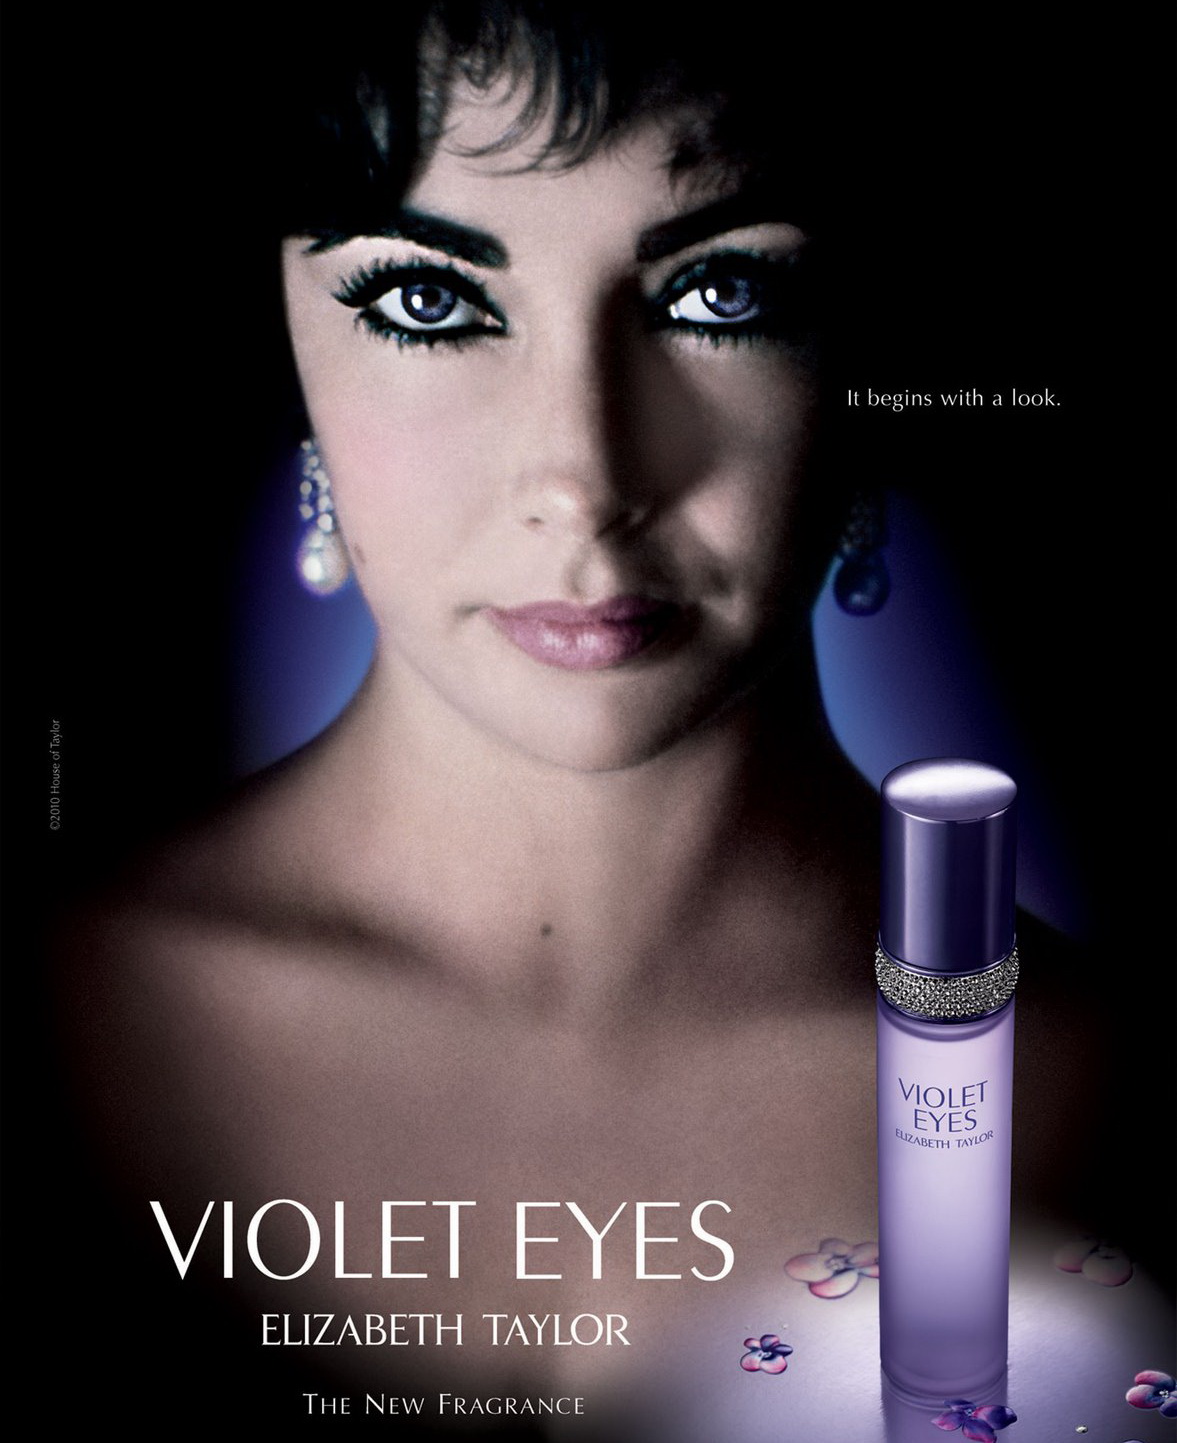 Violet Eyes Elizabeth Taylor. (PRNewsFoto/Violet Eyes Elizabeth Taylor)